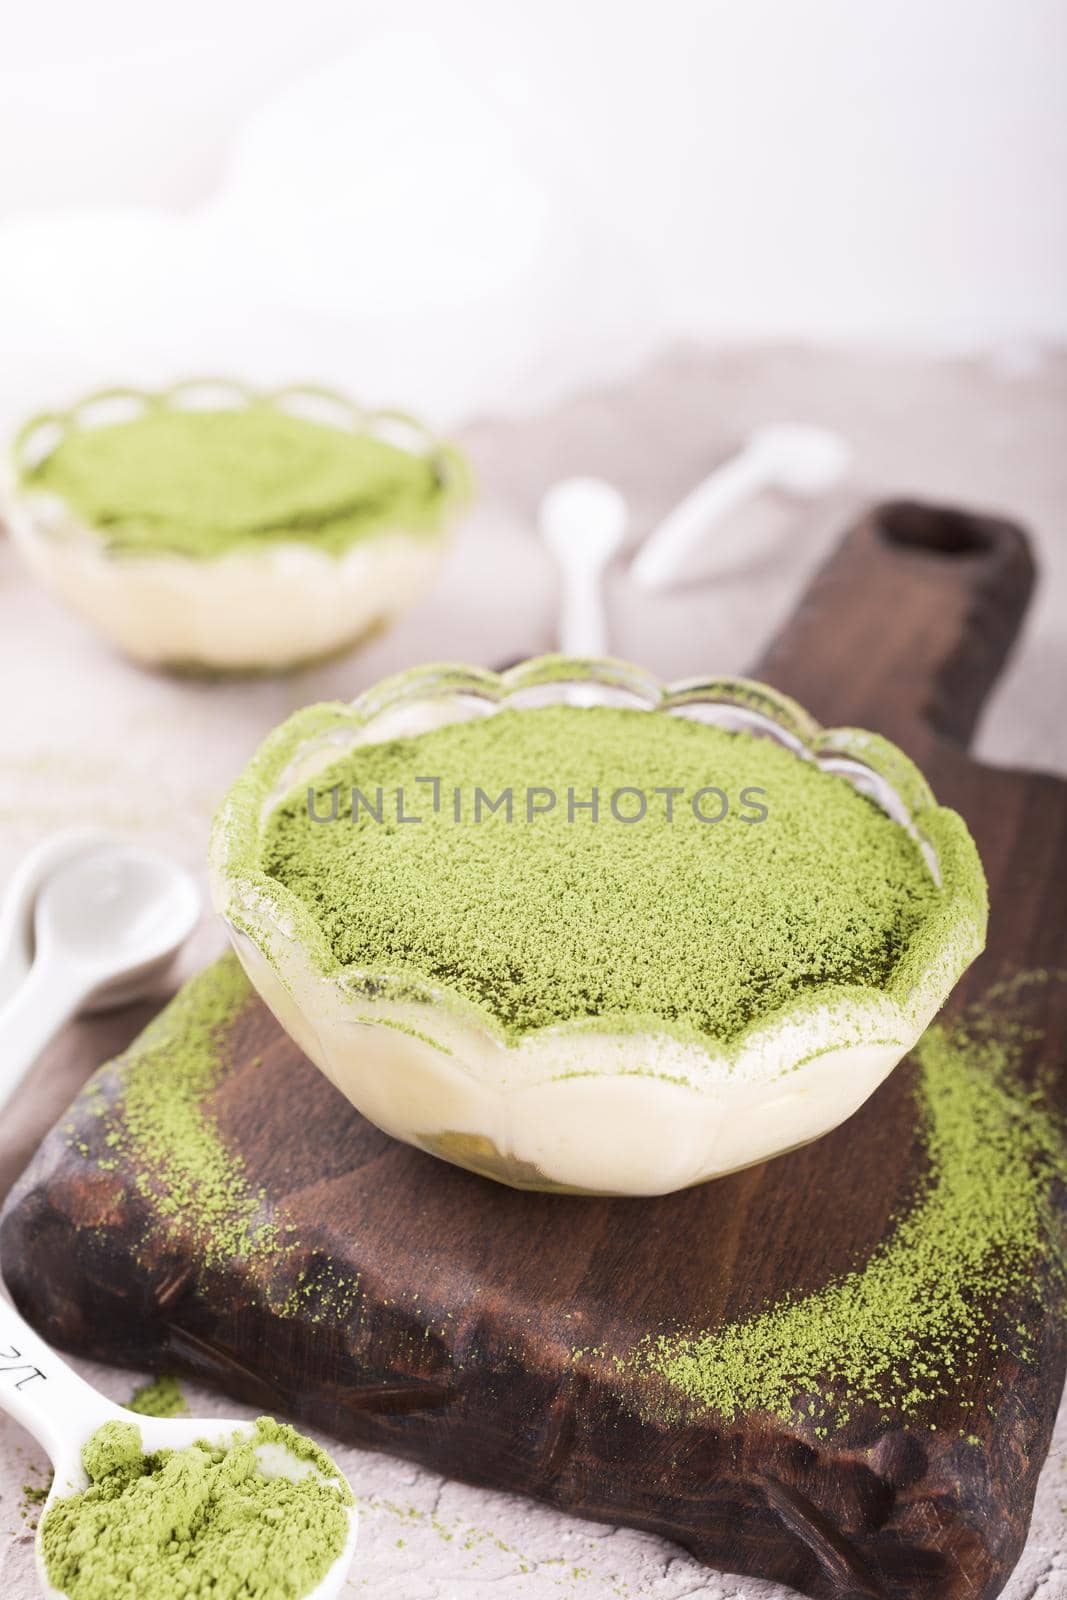 Tiramisu cake with green matcha tea in glass bowl on wooden cutting board.